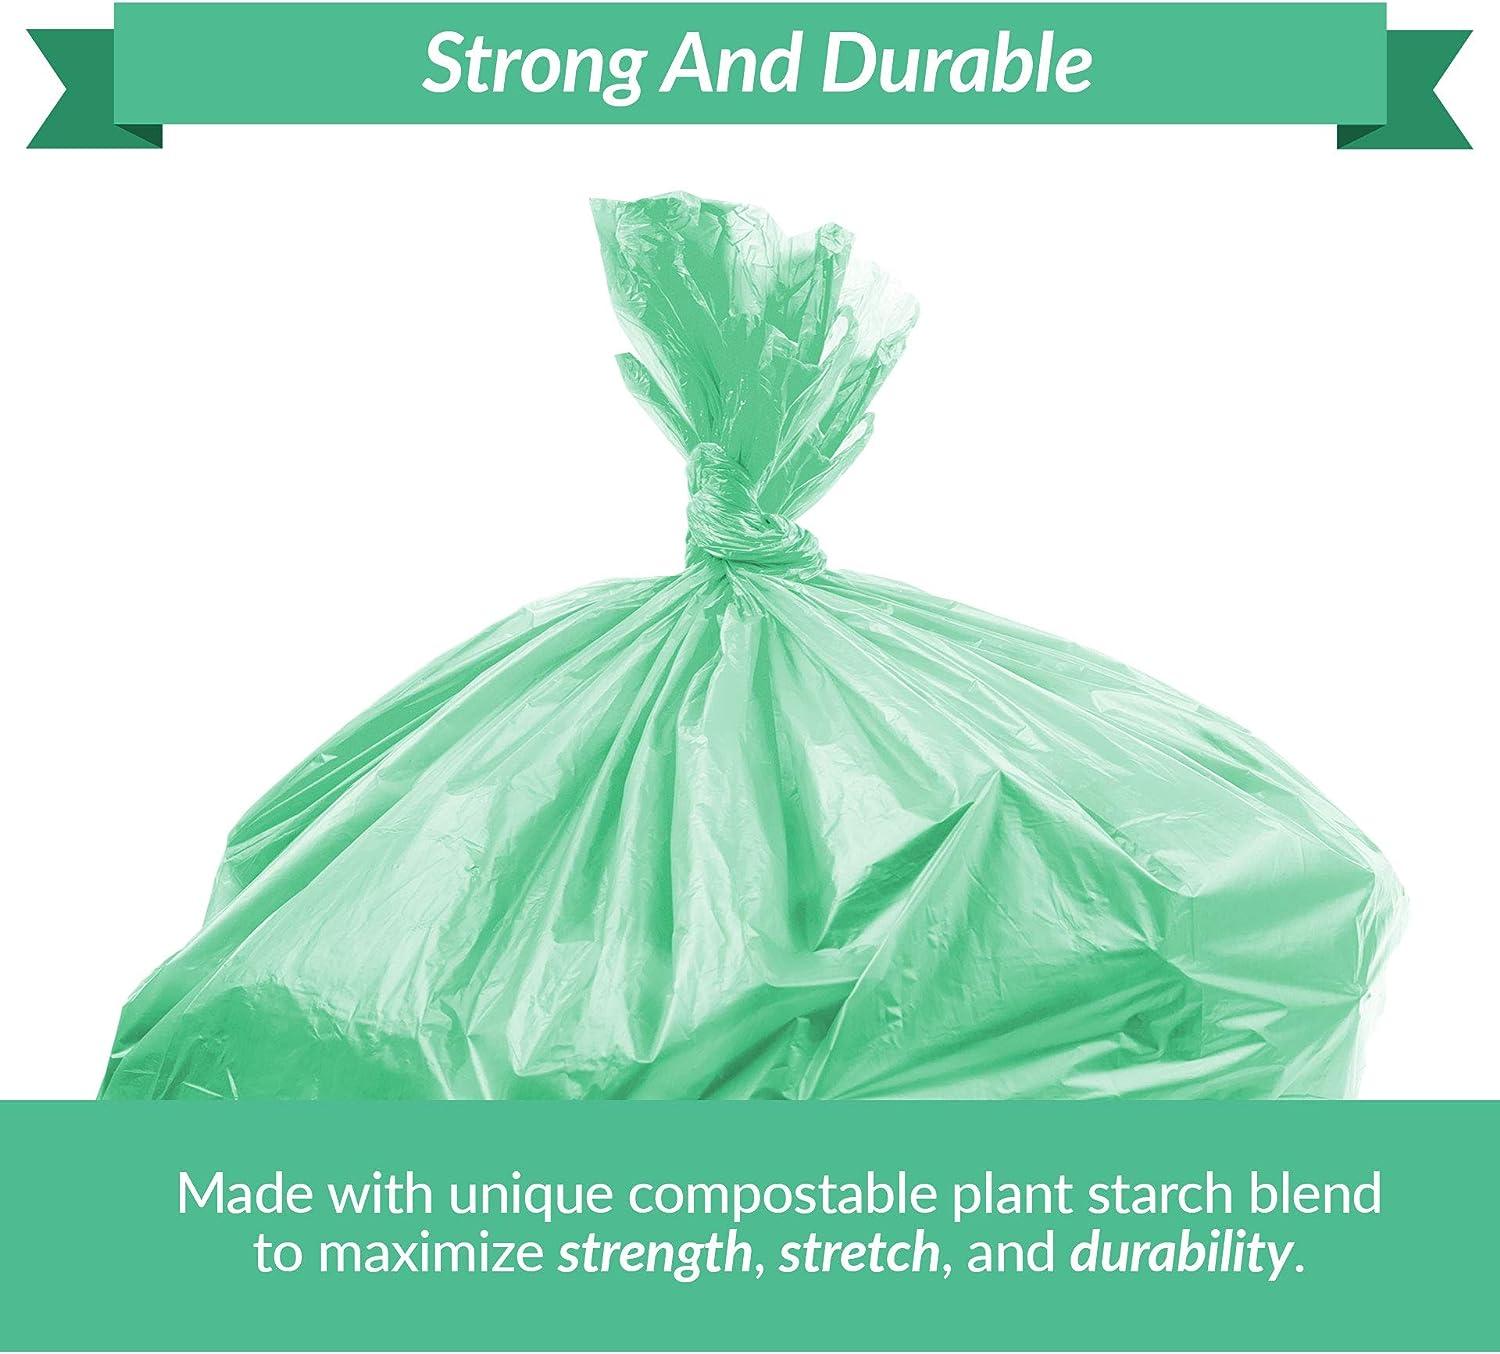 Reli. 33 Gallon Trash Bags Heavy Duty (250 Count Bulk) - Black Garbage Bags  30 Gallon